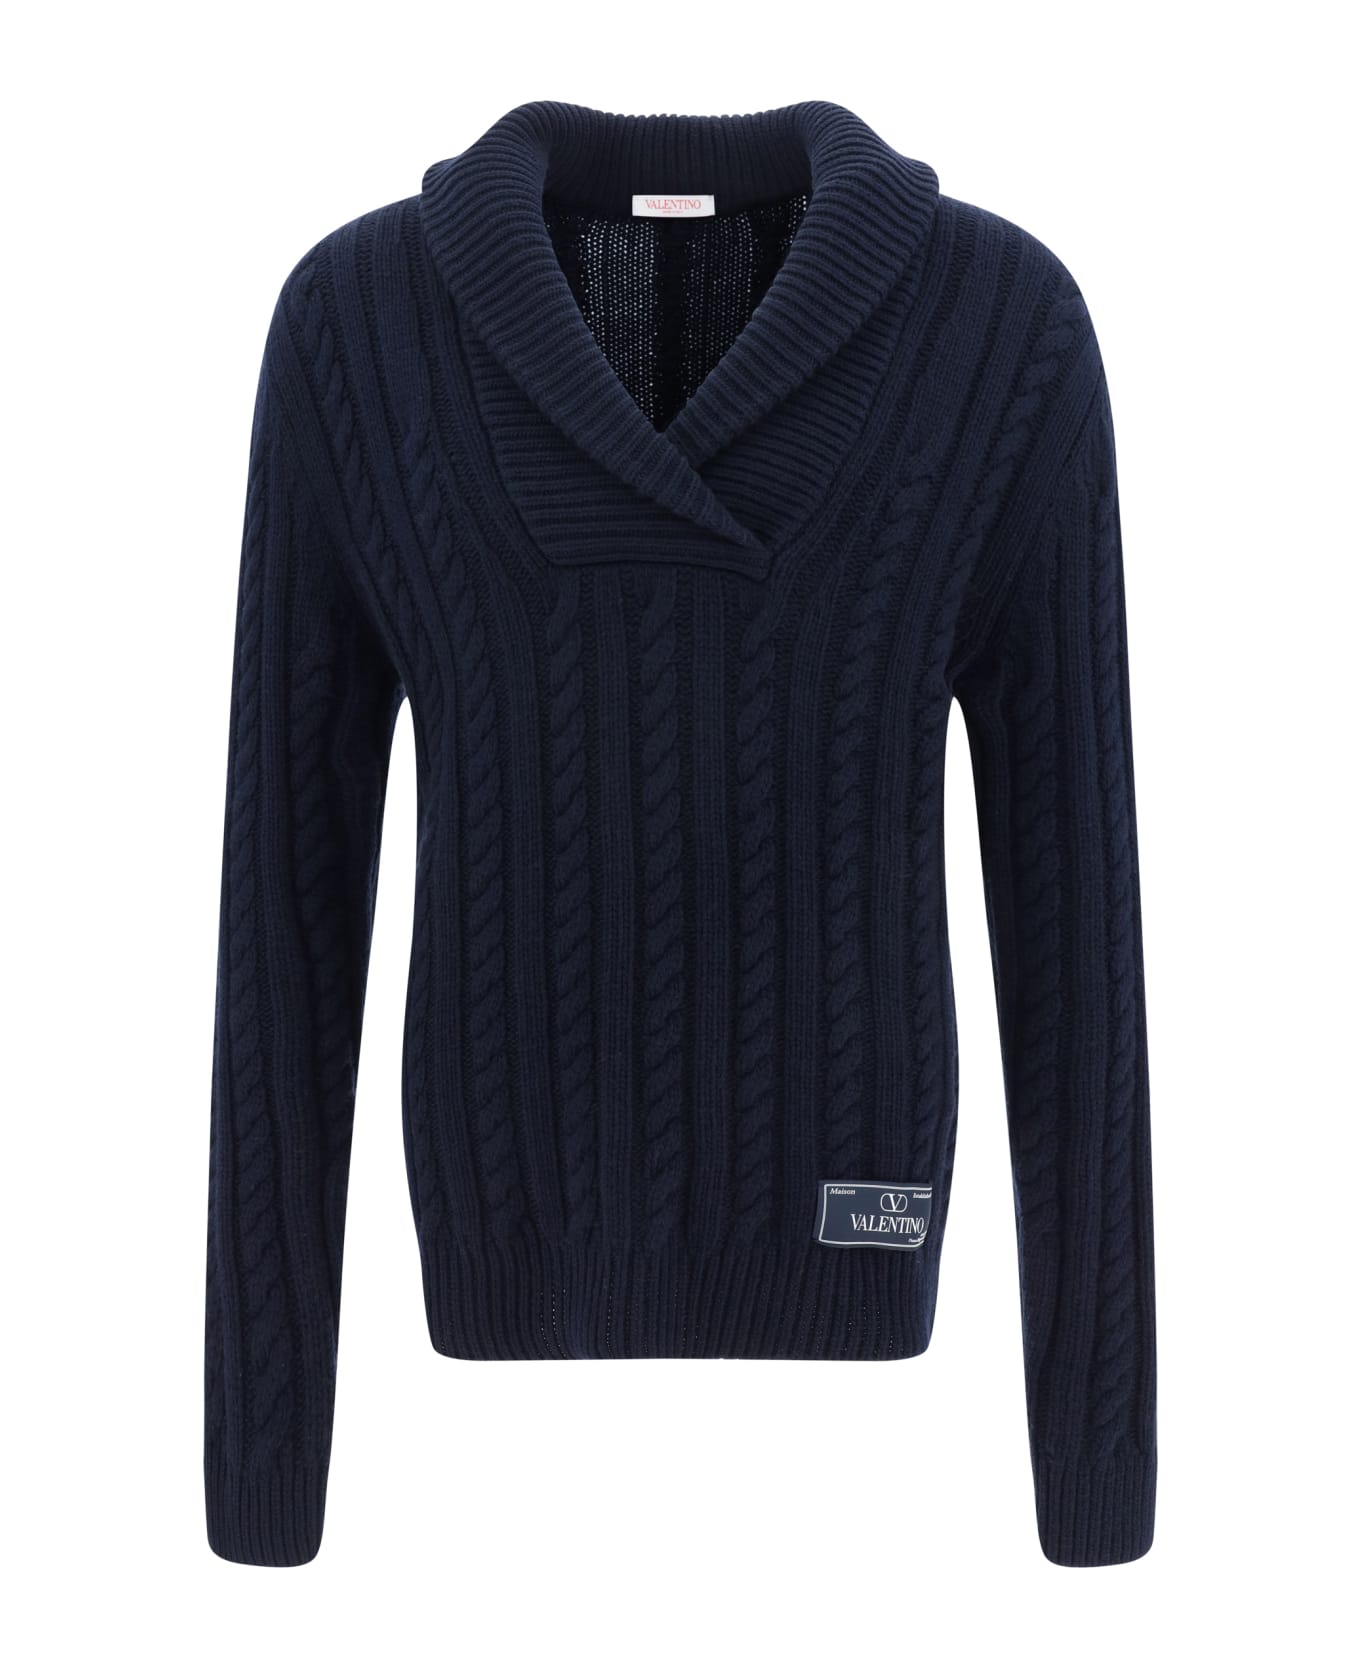 Valentino Cable Knit Sweater - Navy ニットウェア